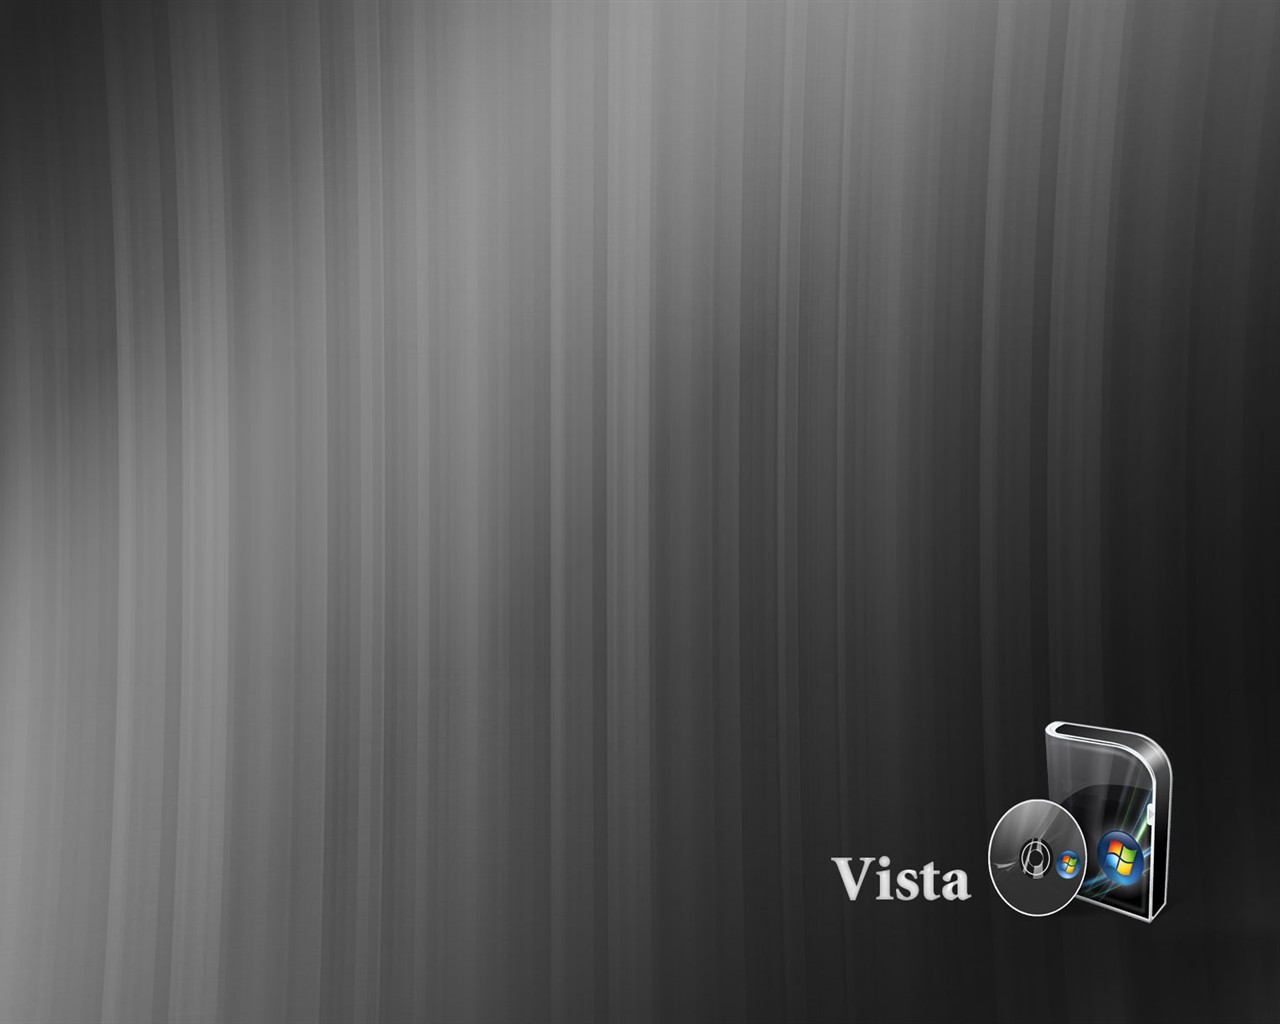  Vistaの壁紙アルバム #16 - 1280x1024